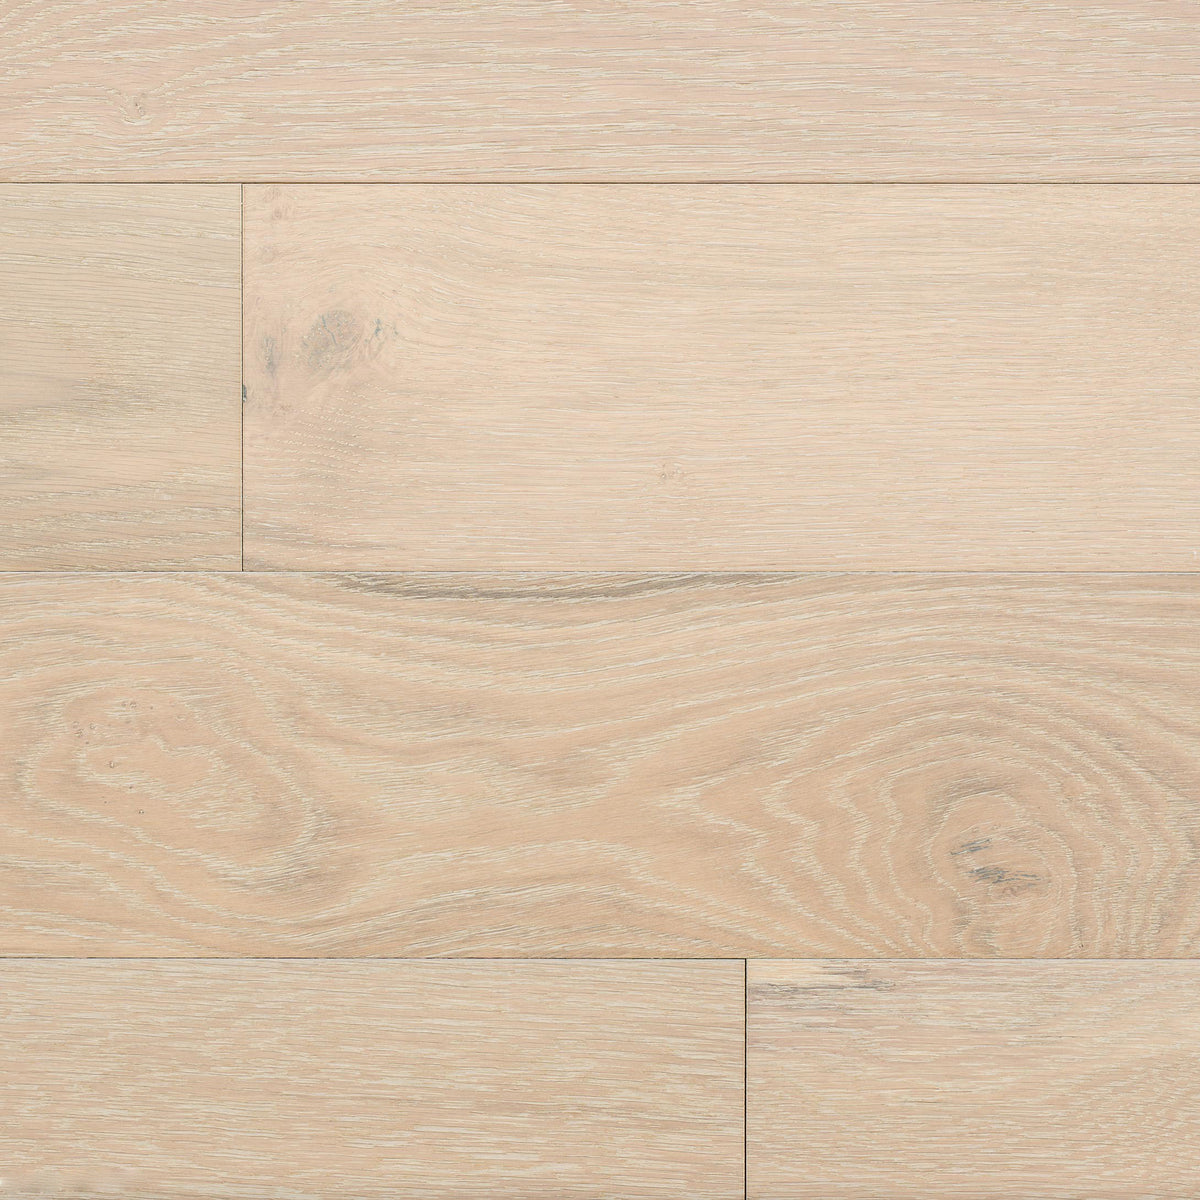 Naturally Aged Flooring - Royal Collection- Hand Scraped Maple Engineered Hardwood - Savanna